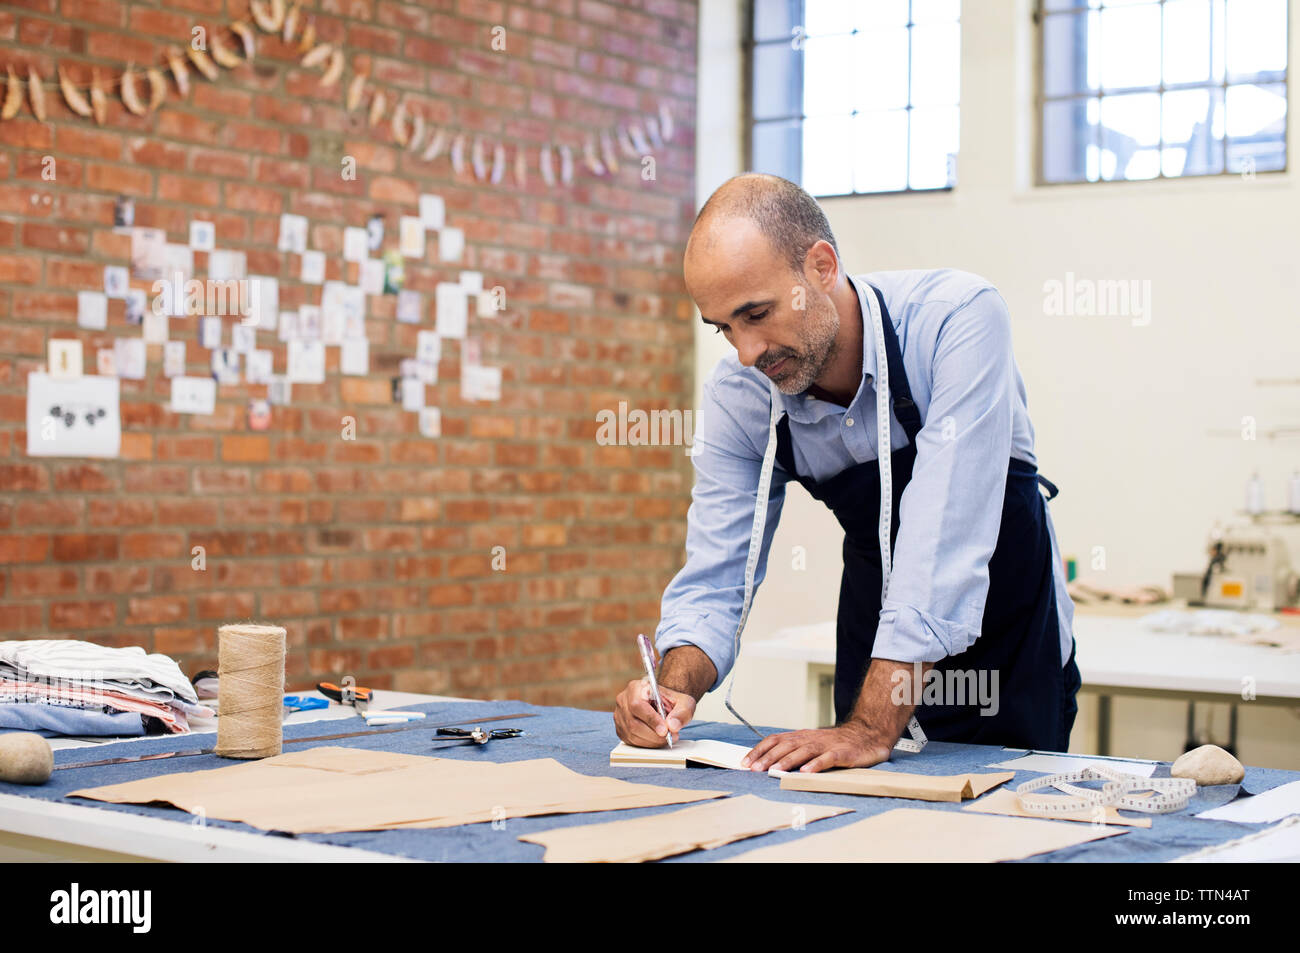 Male Fashion designer working at table in workshop Banque D'Images